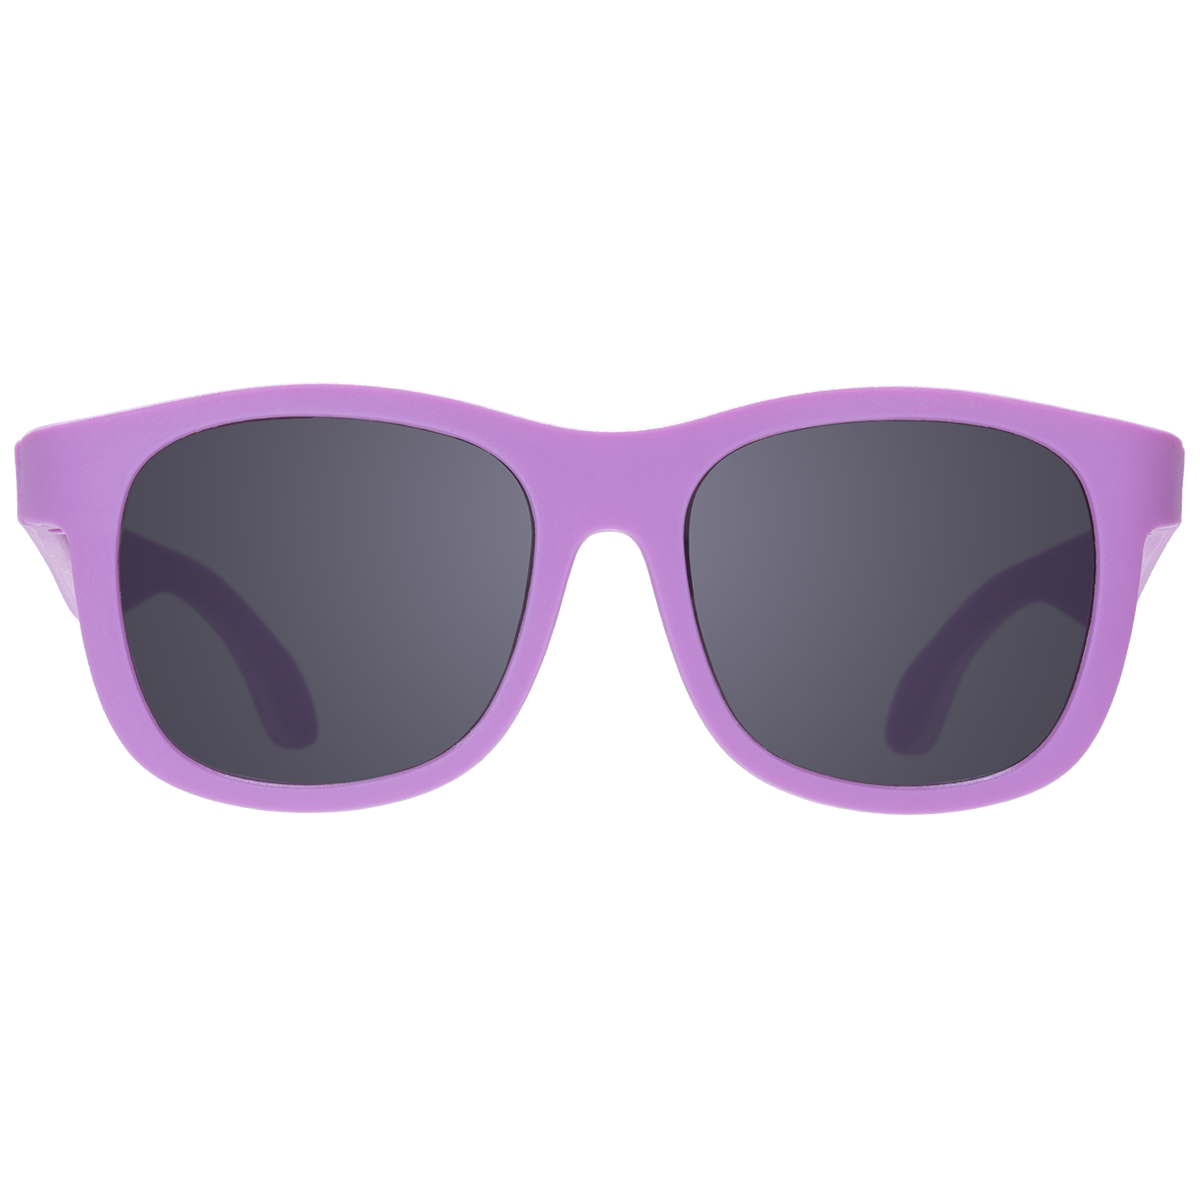 A Little Lilac Navigator Babiators Sunglasses